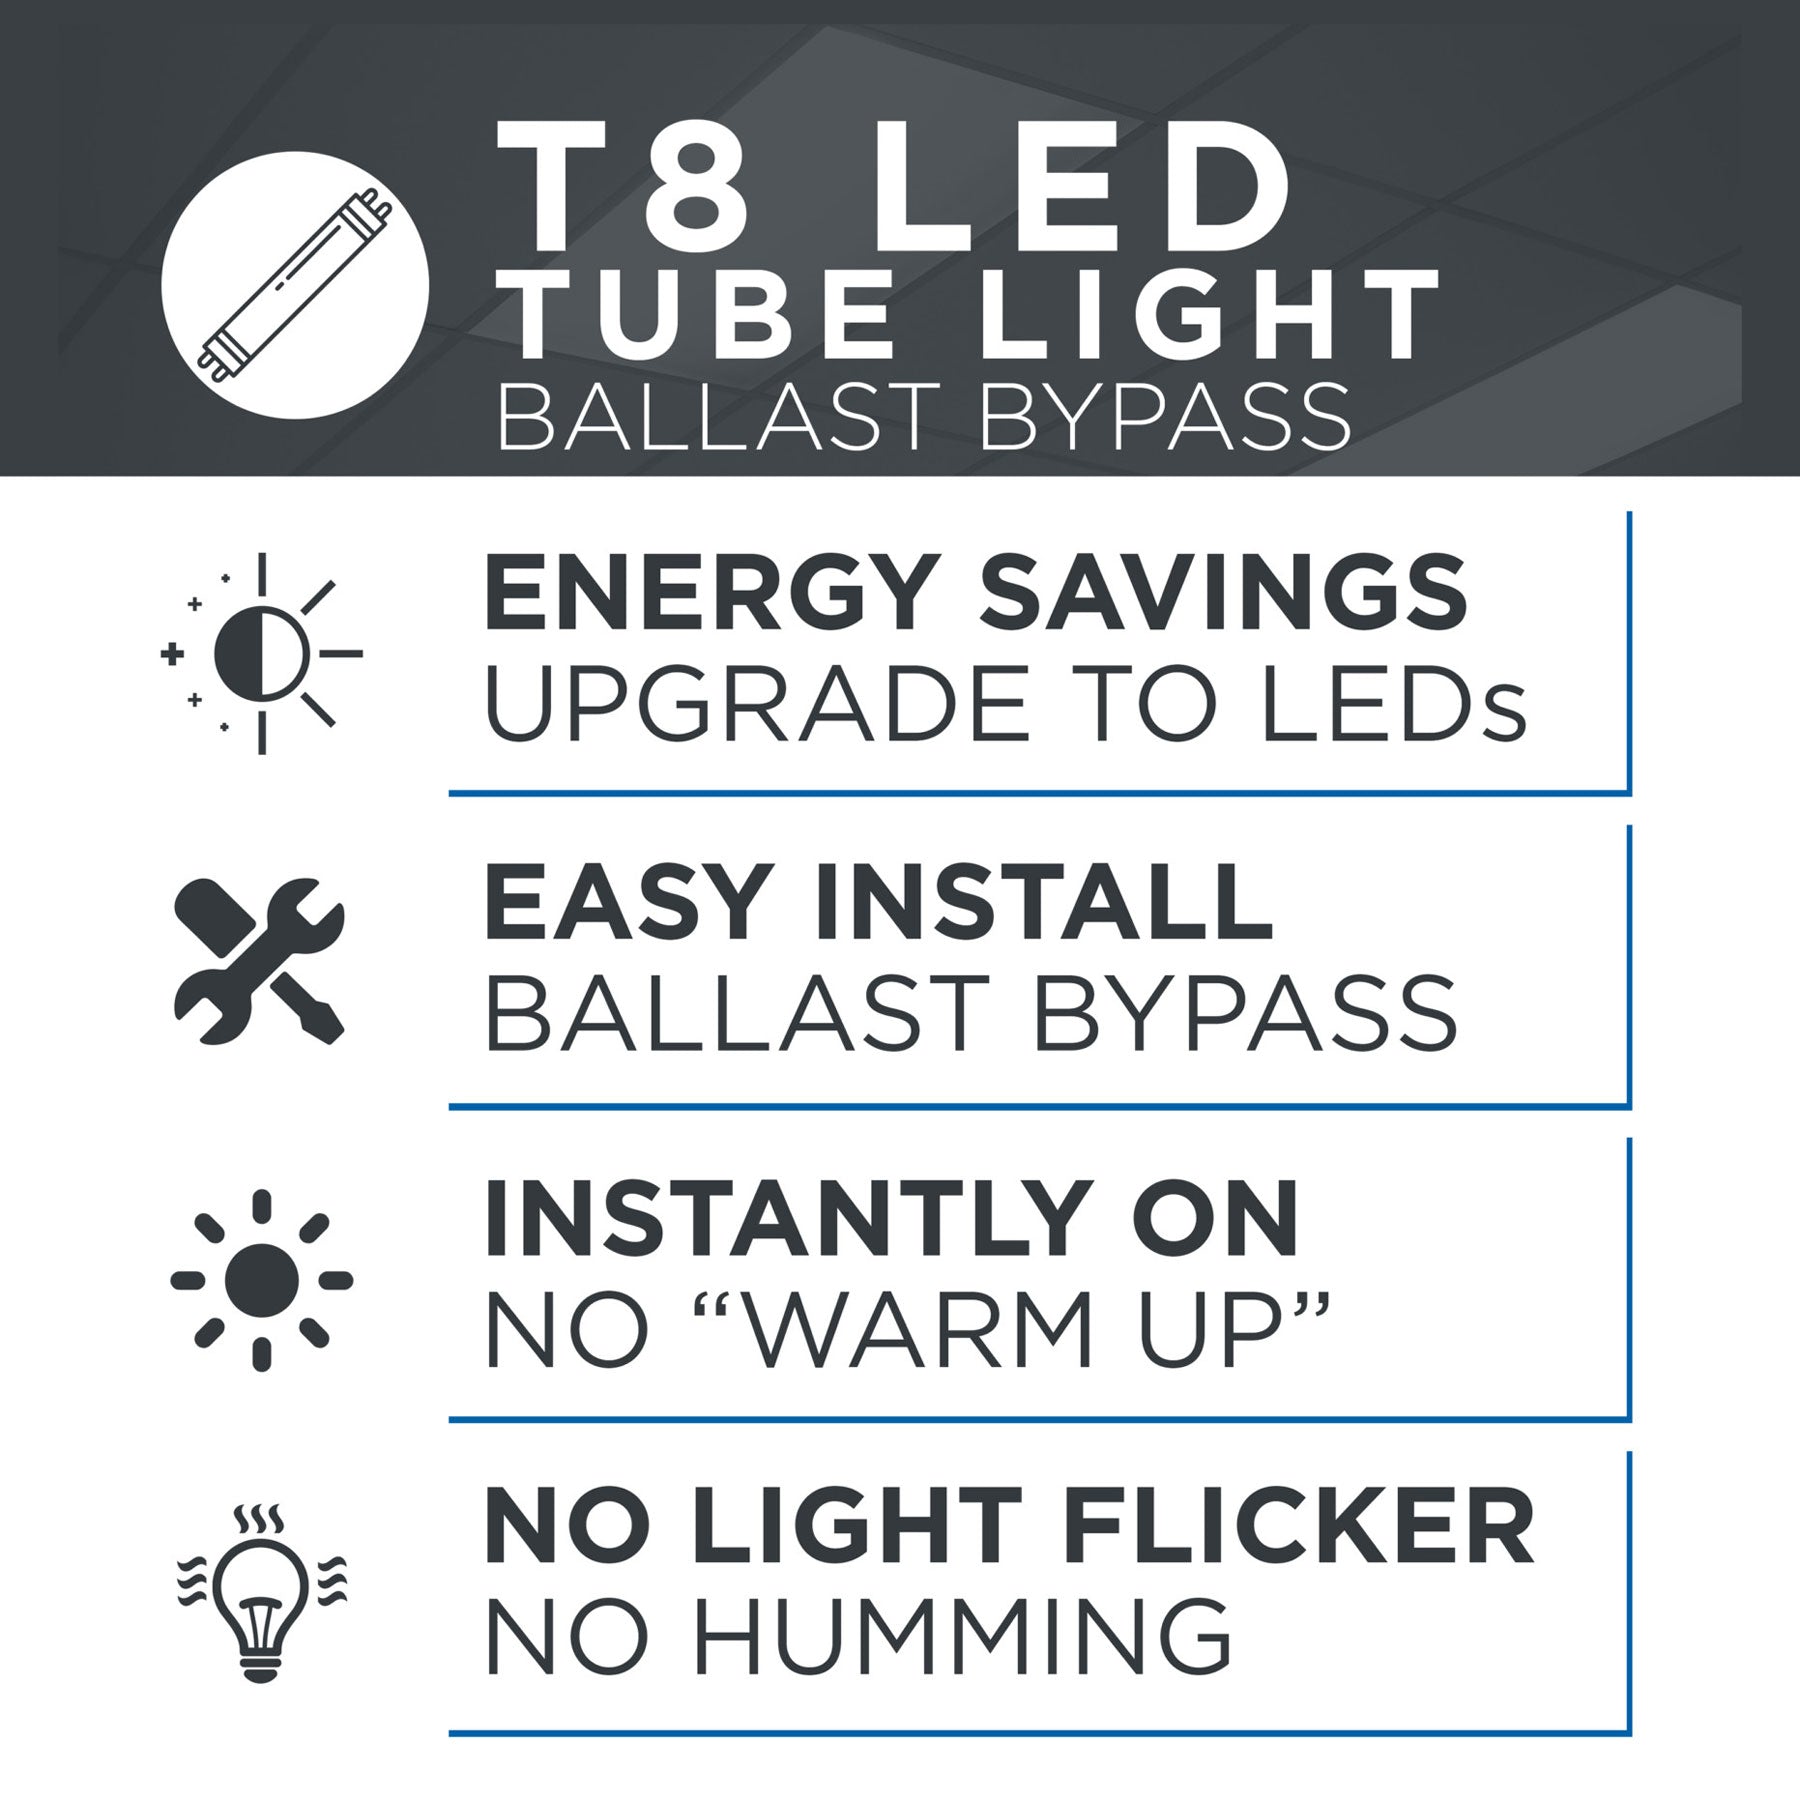  25-Watt T8 5-Foot Ballast Bypass 2700 Lumens LED Light Tube